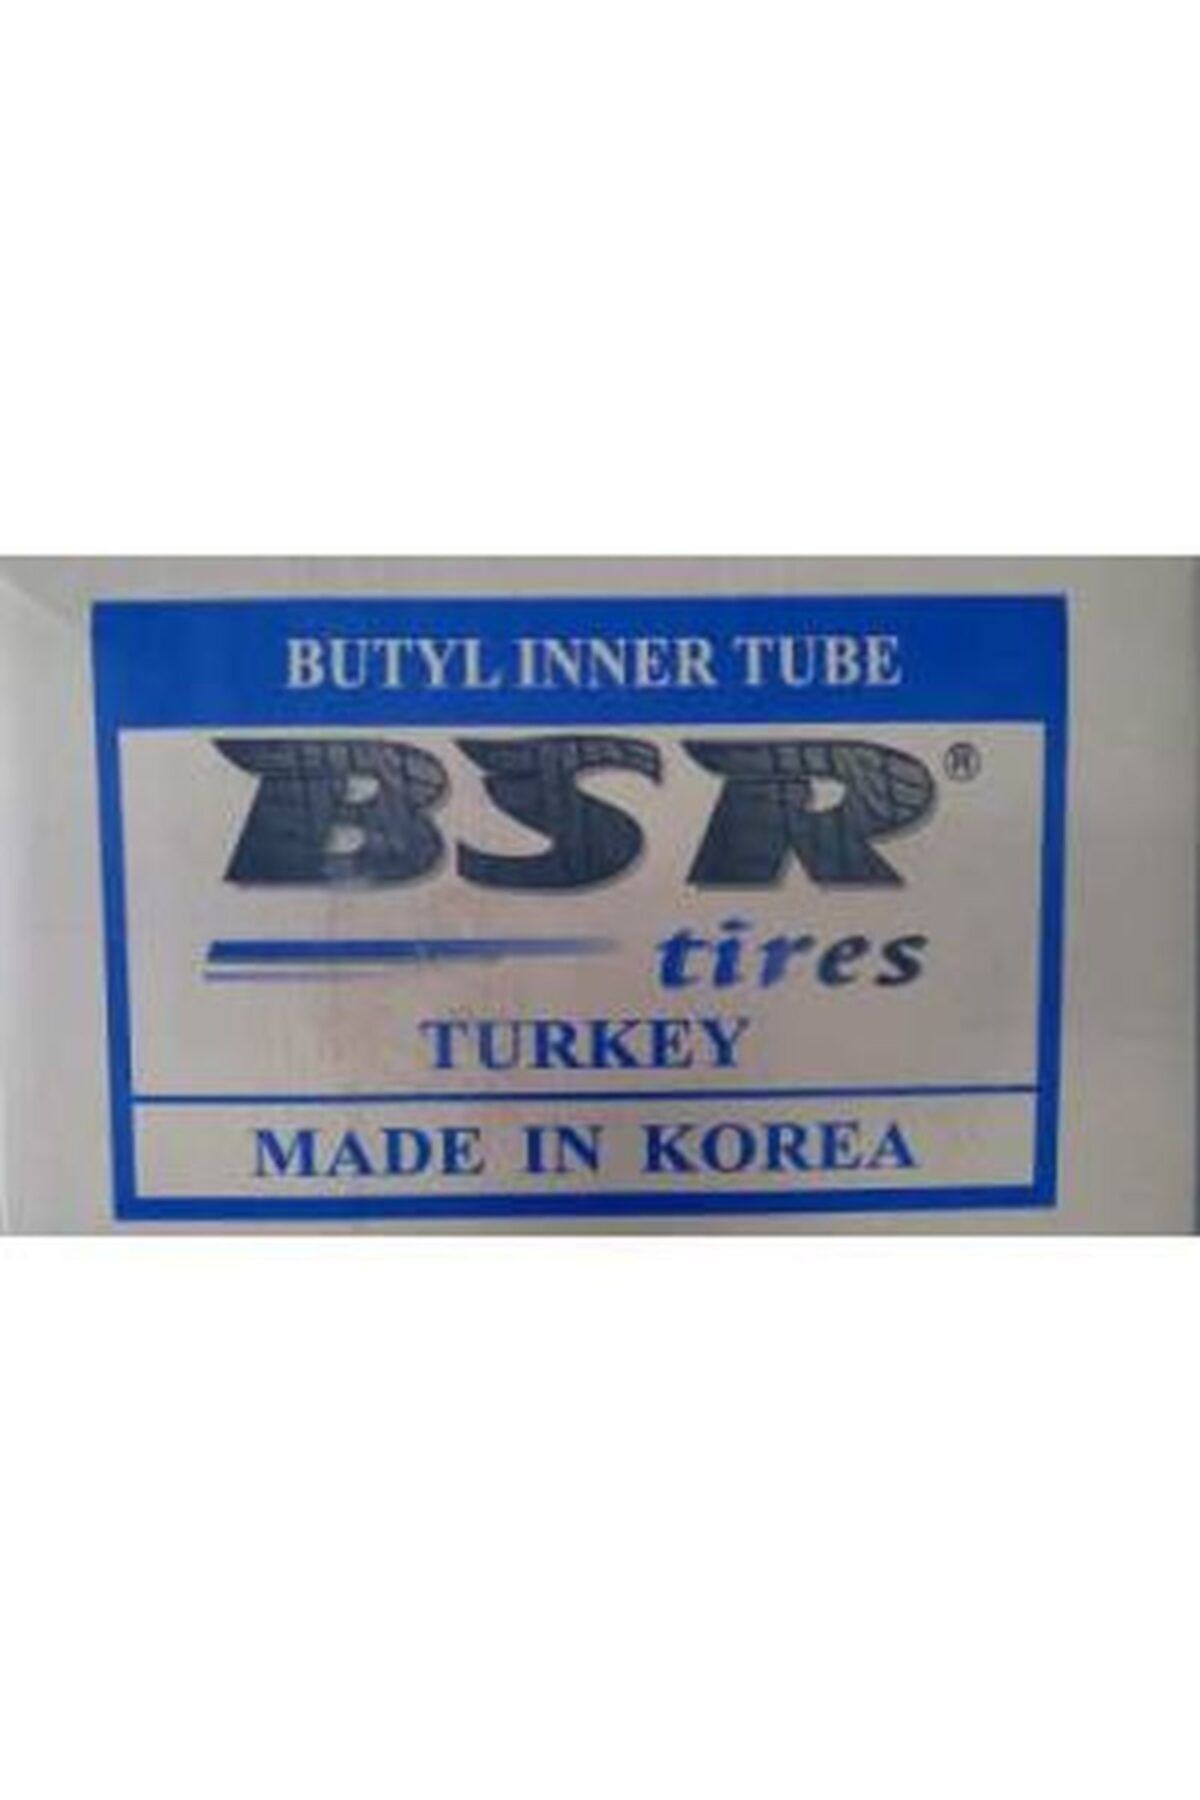 BSR Lastik Market 18.4/15-26 Tr218a (18.4-26) Kore Malı Butil Iç Lastik, Iş Makinası Iç Lastik